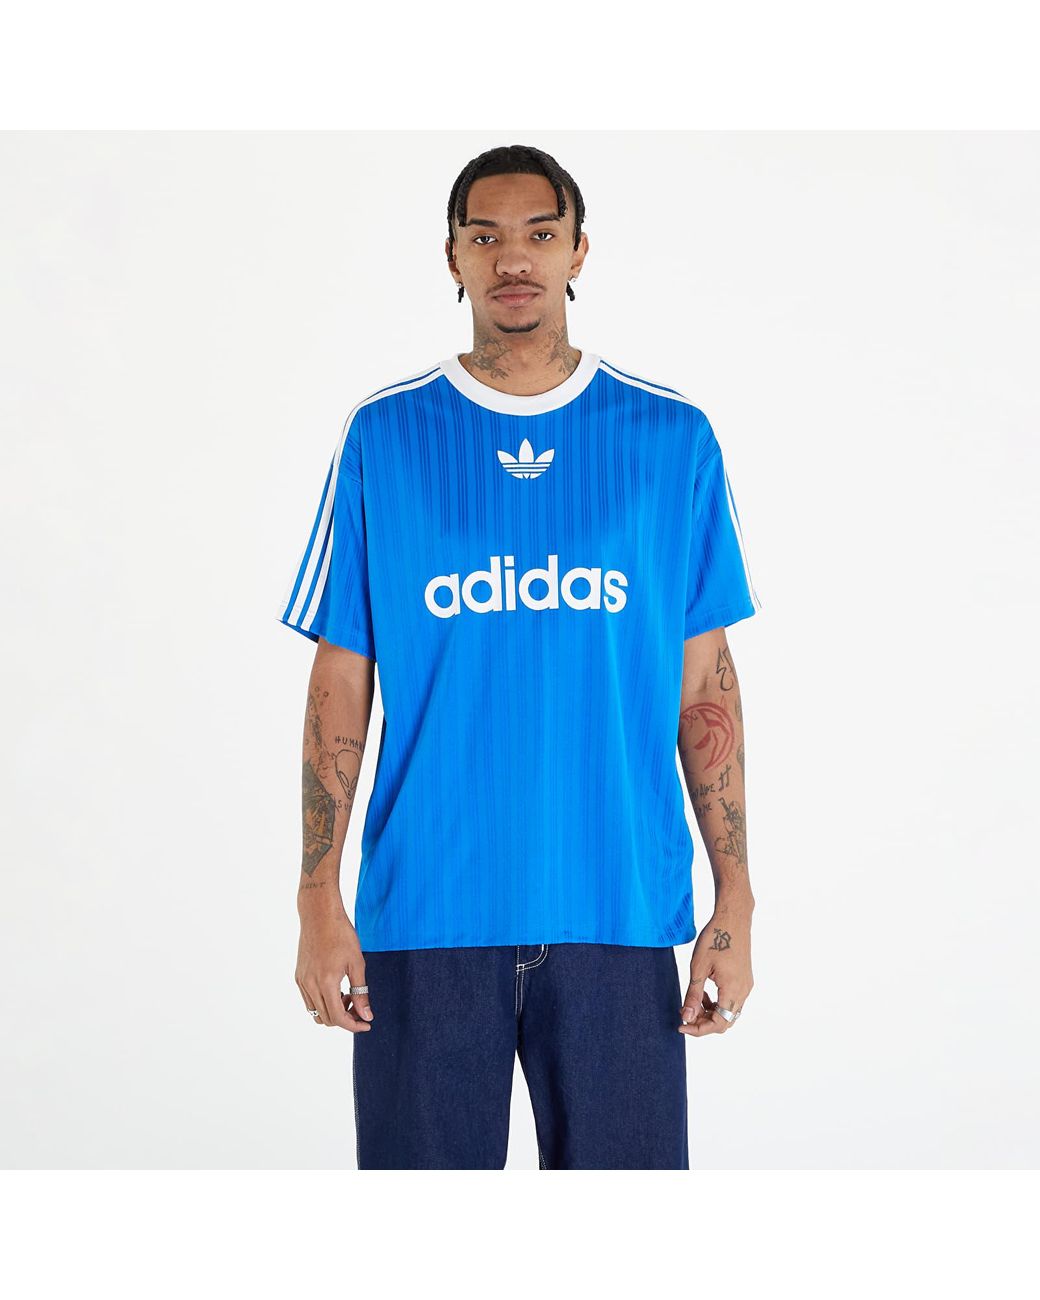 Adidas adidas Tee Lyst Short White in Poly Blue for | Originals Sleeve Bird/ Adicolor Men